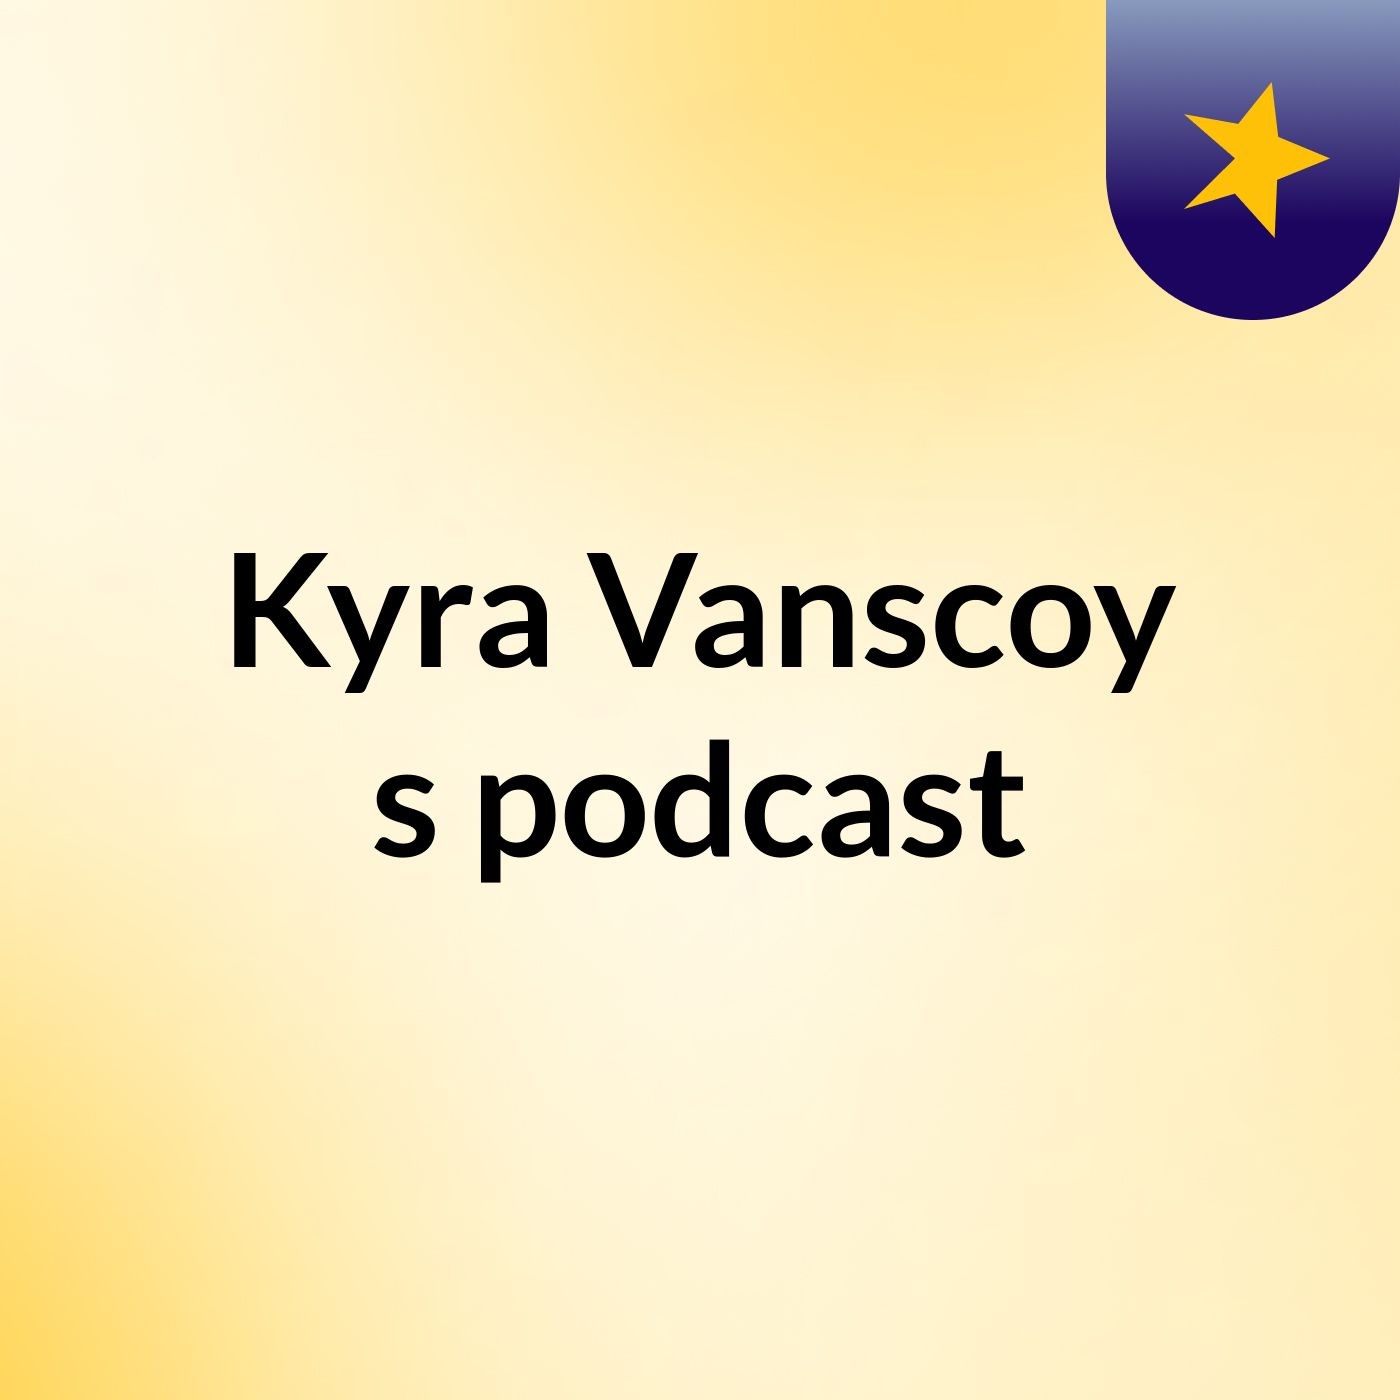 Kyra Vanscoy's podcast